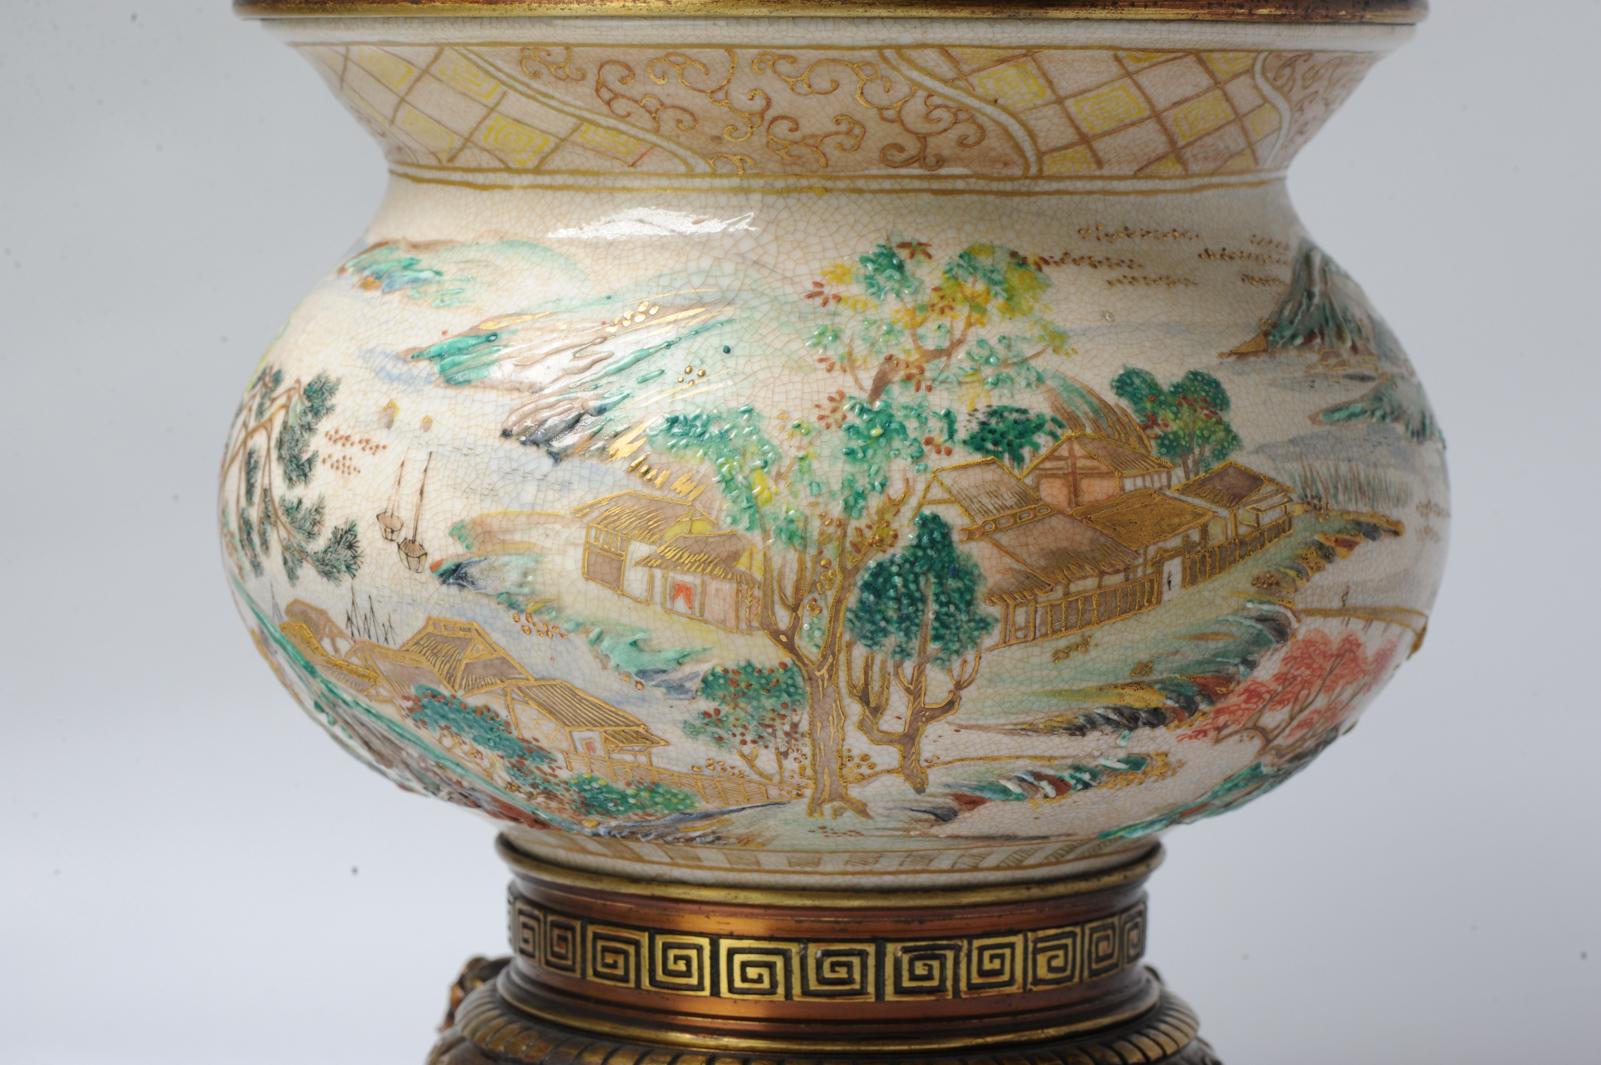  Antique Beautiful Japanese Satsuma Bowl Lndscape Oromulu Japan Porcelain 19C For Sale 5